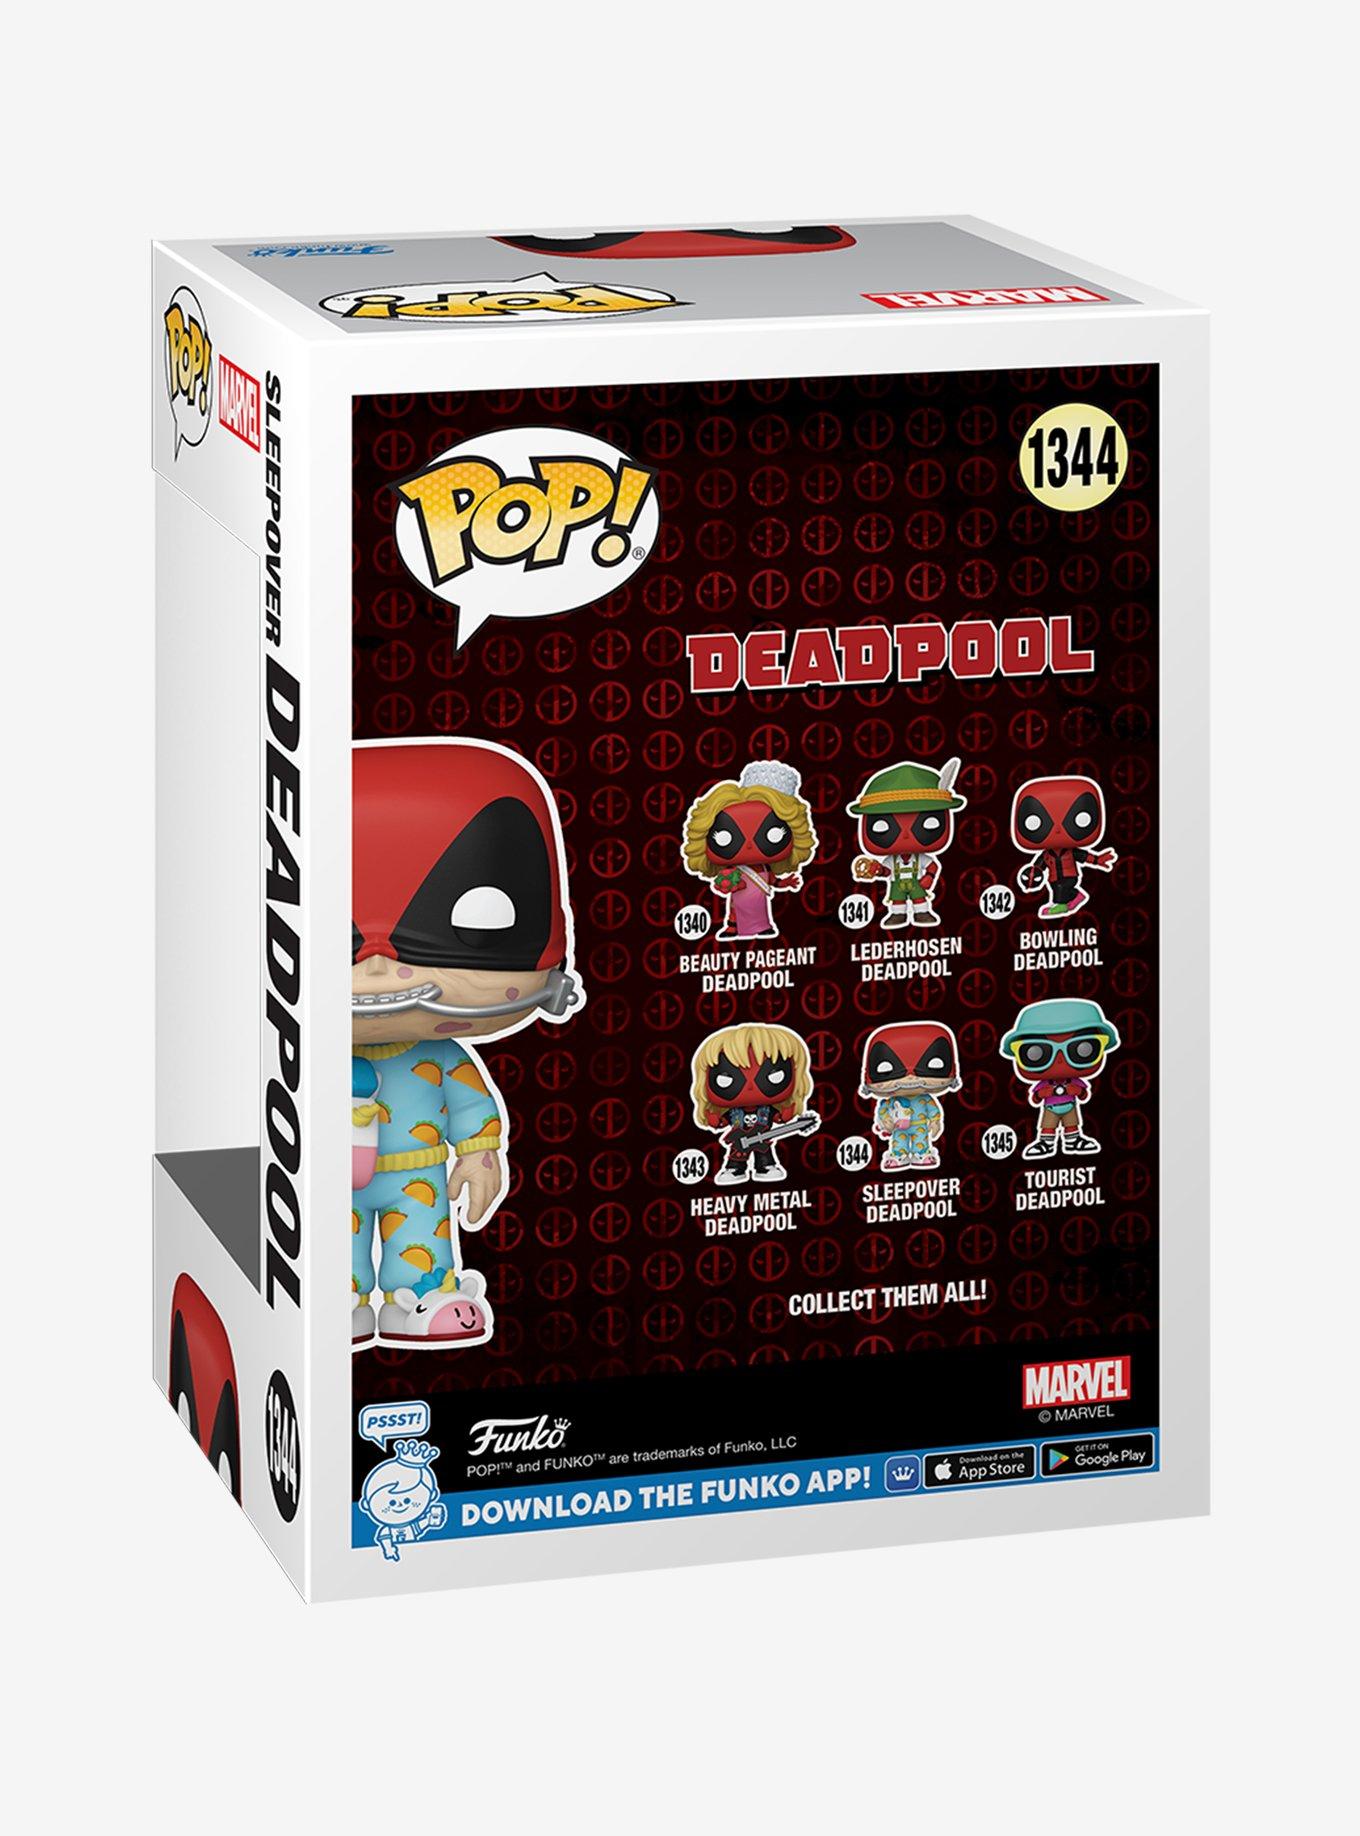 Funko Deadpool Pop! Marvel Sleepover Deadpool Vinyl Bobble-Head